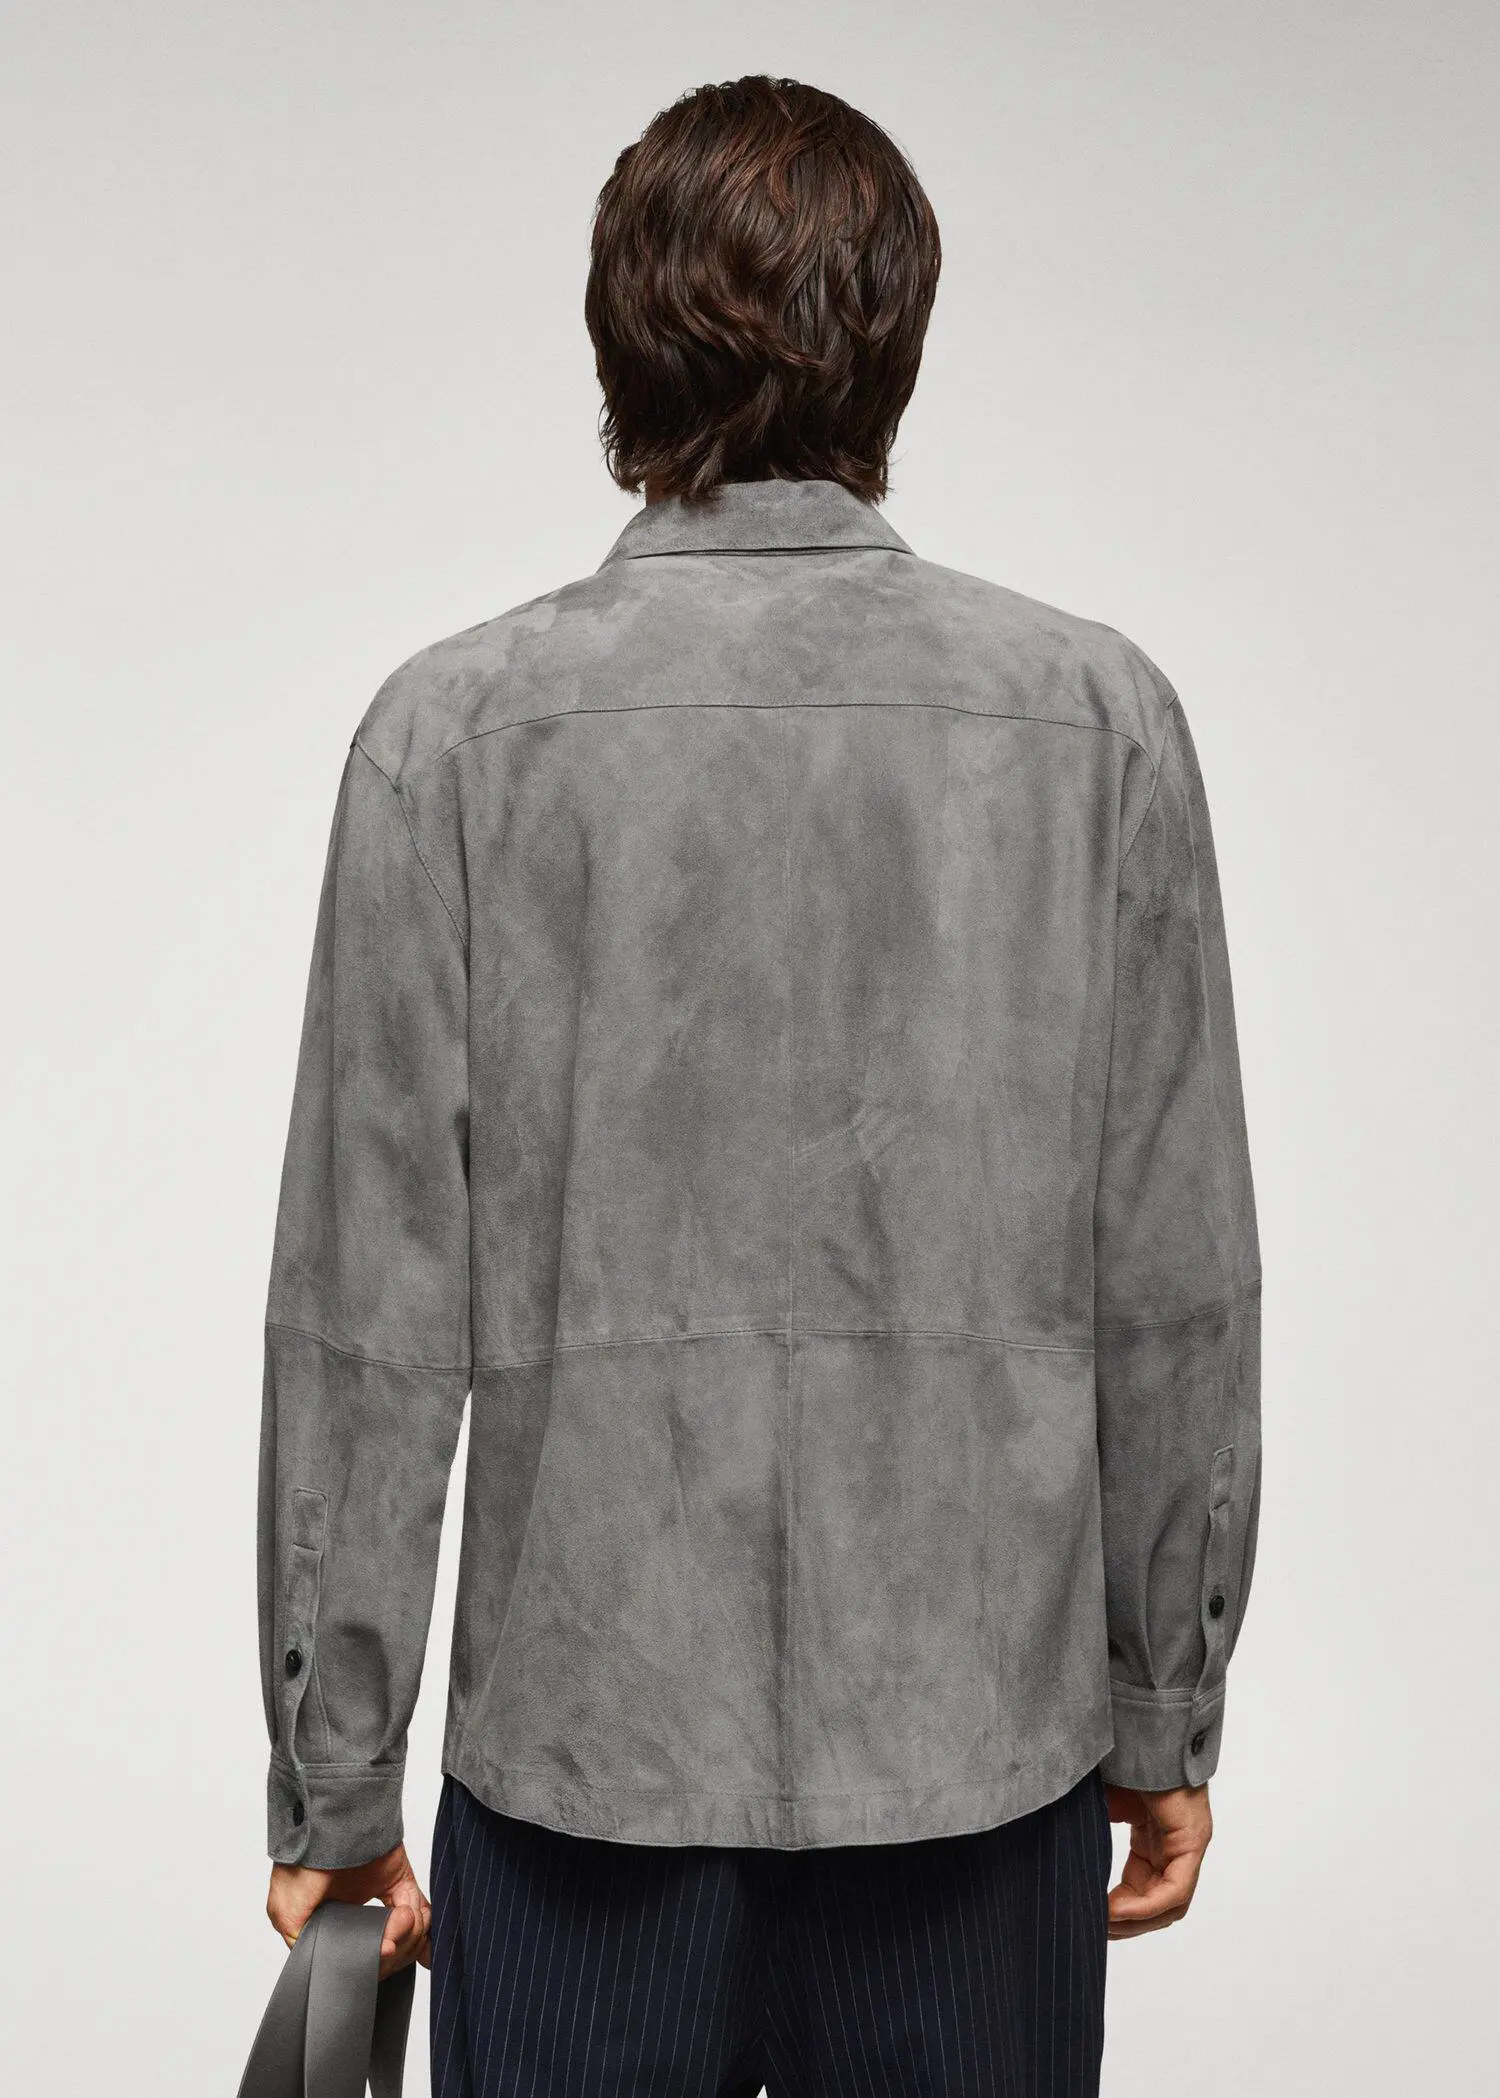 Mango Suede leather overshirt with pocket. 3